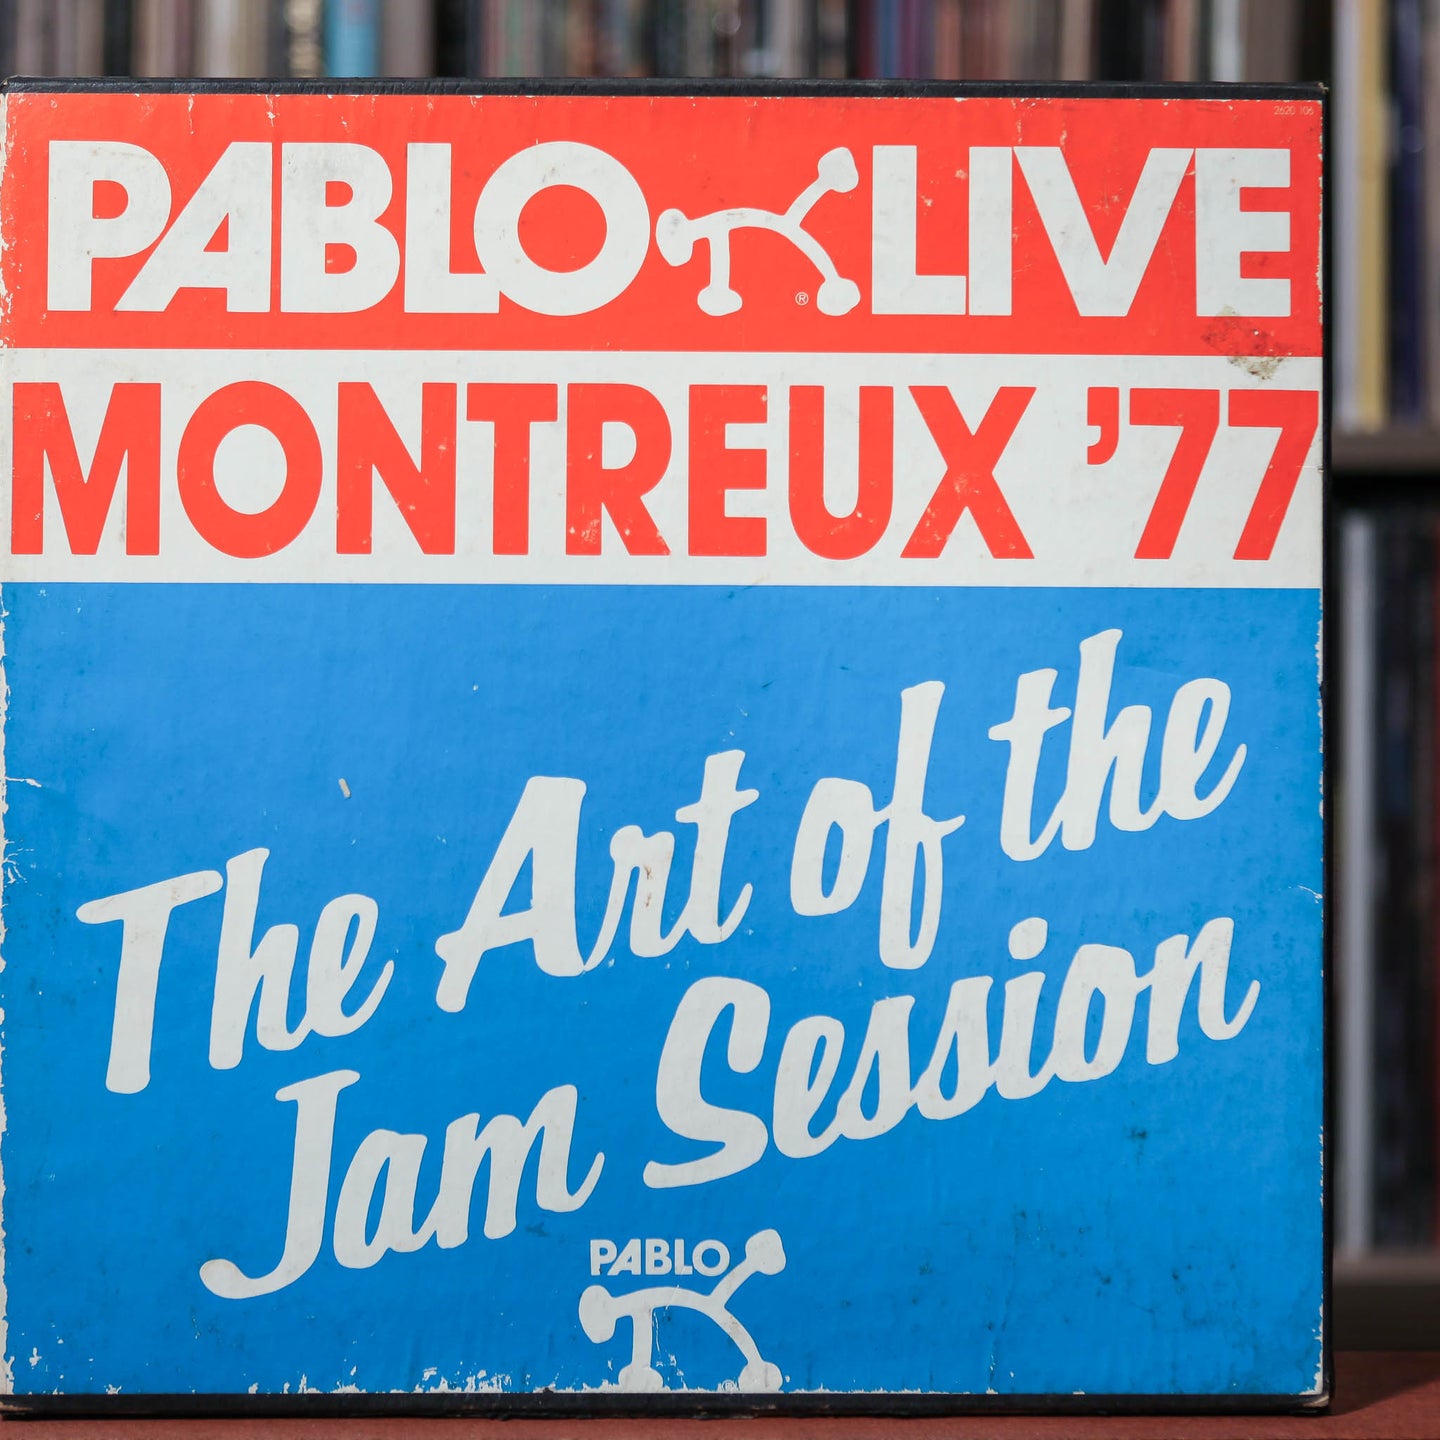 Montreux '77 - The Art Of The Jam Session - Various - 8LP - 1977 Pablo Live, VG/VG+